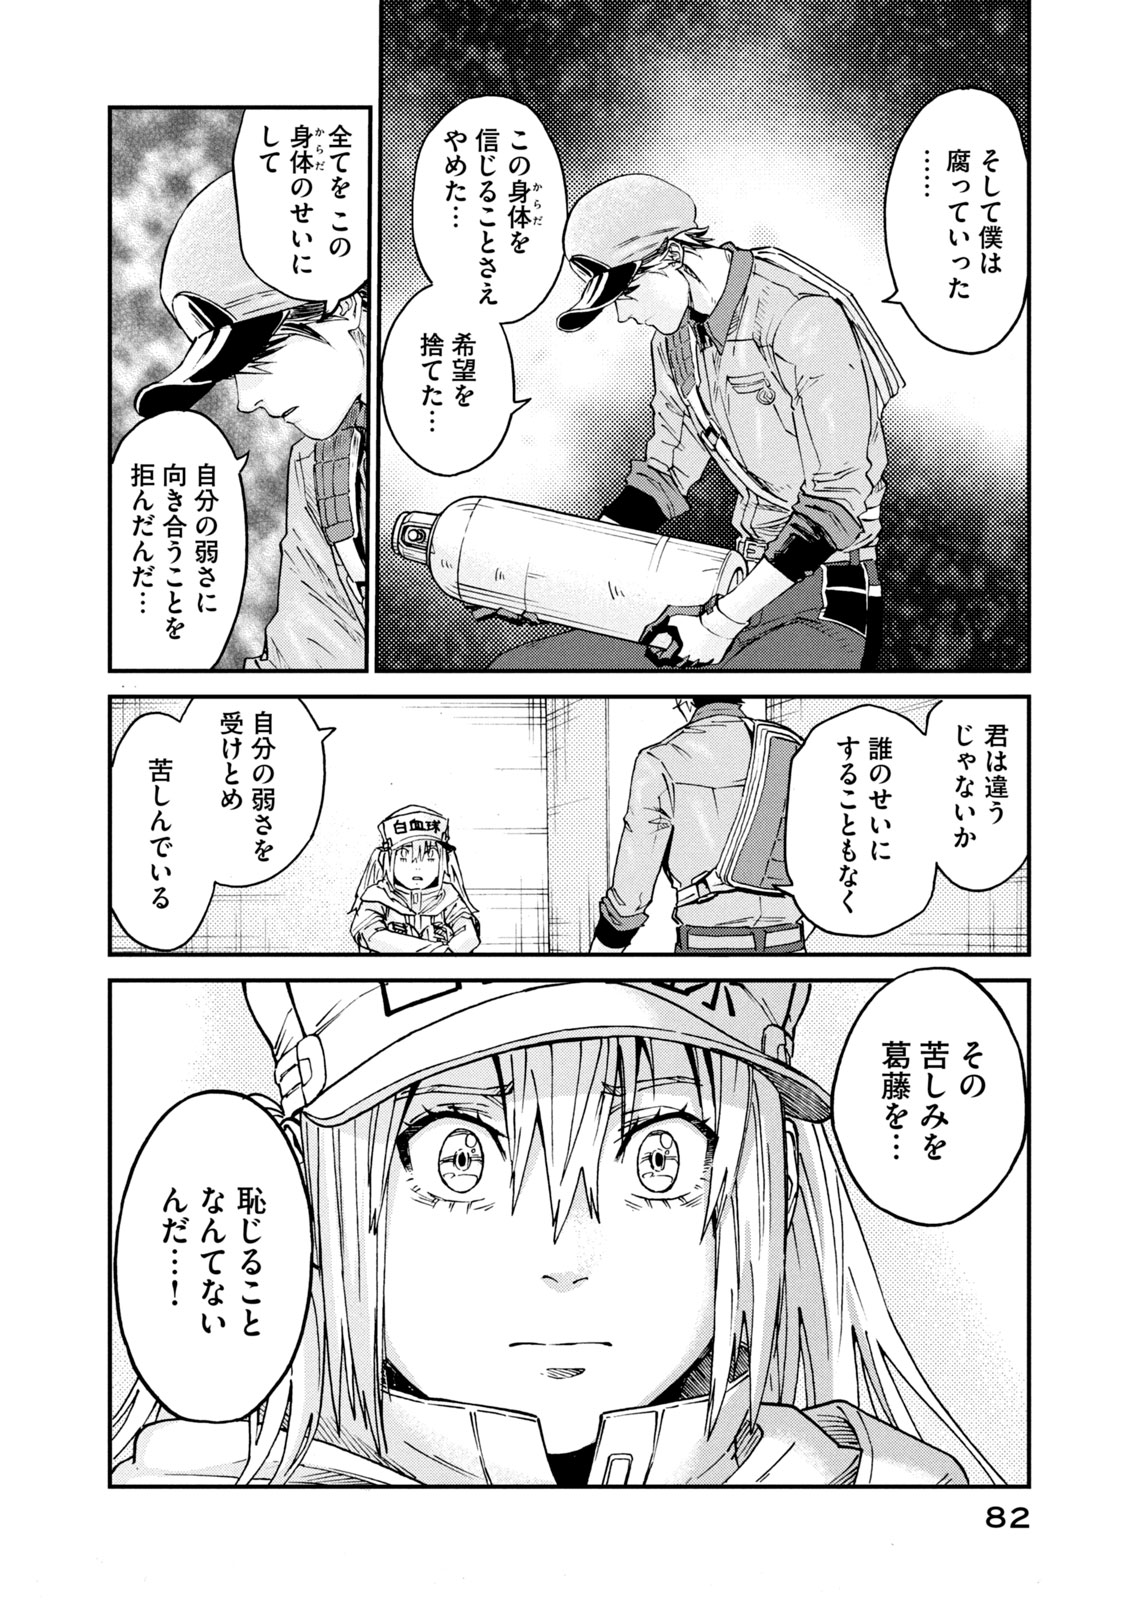 Hataraku Saibou BLACK - Chapter 39 - Page 20